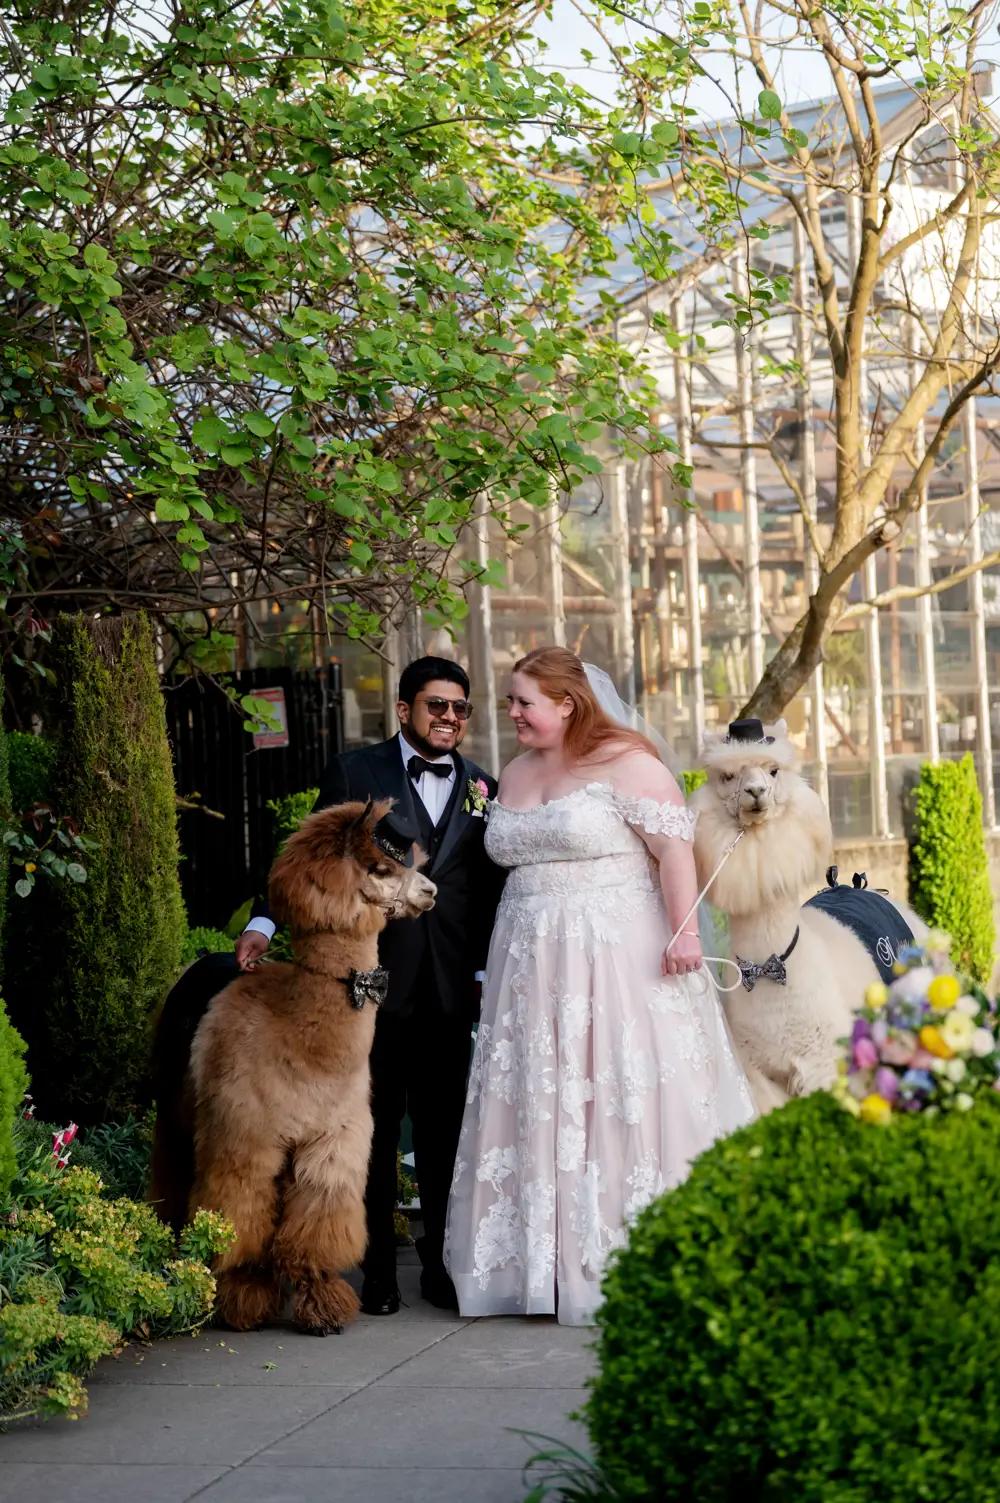 Bride and Groom Portrait with Llamas